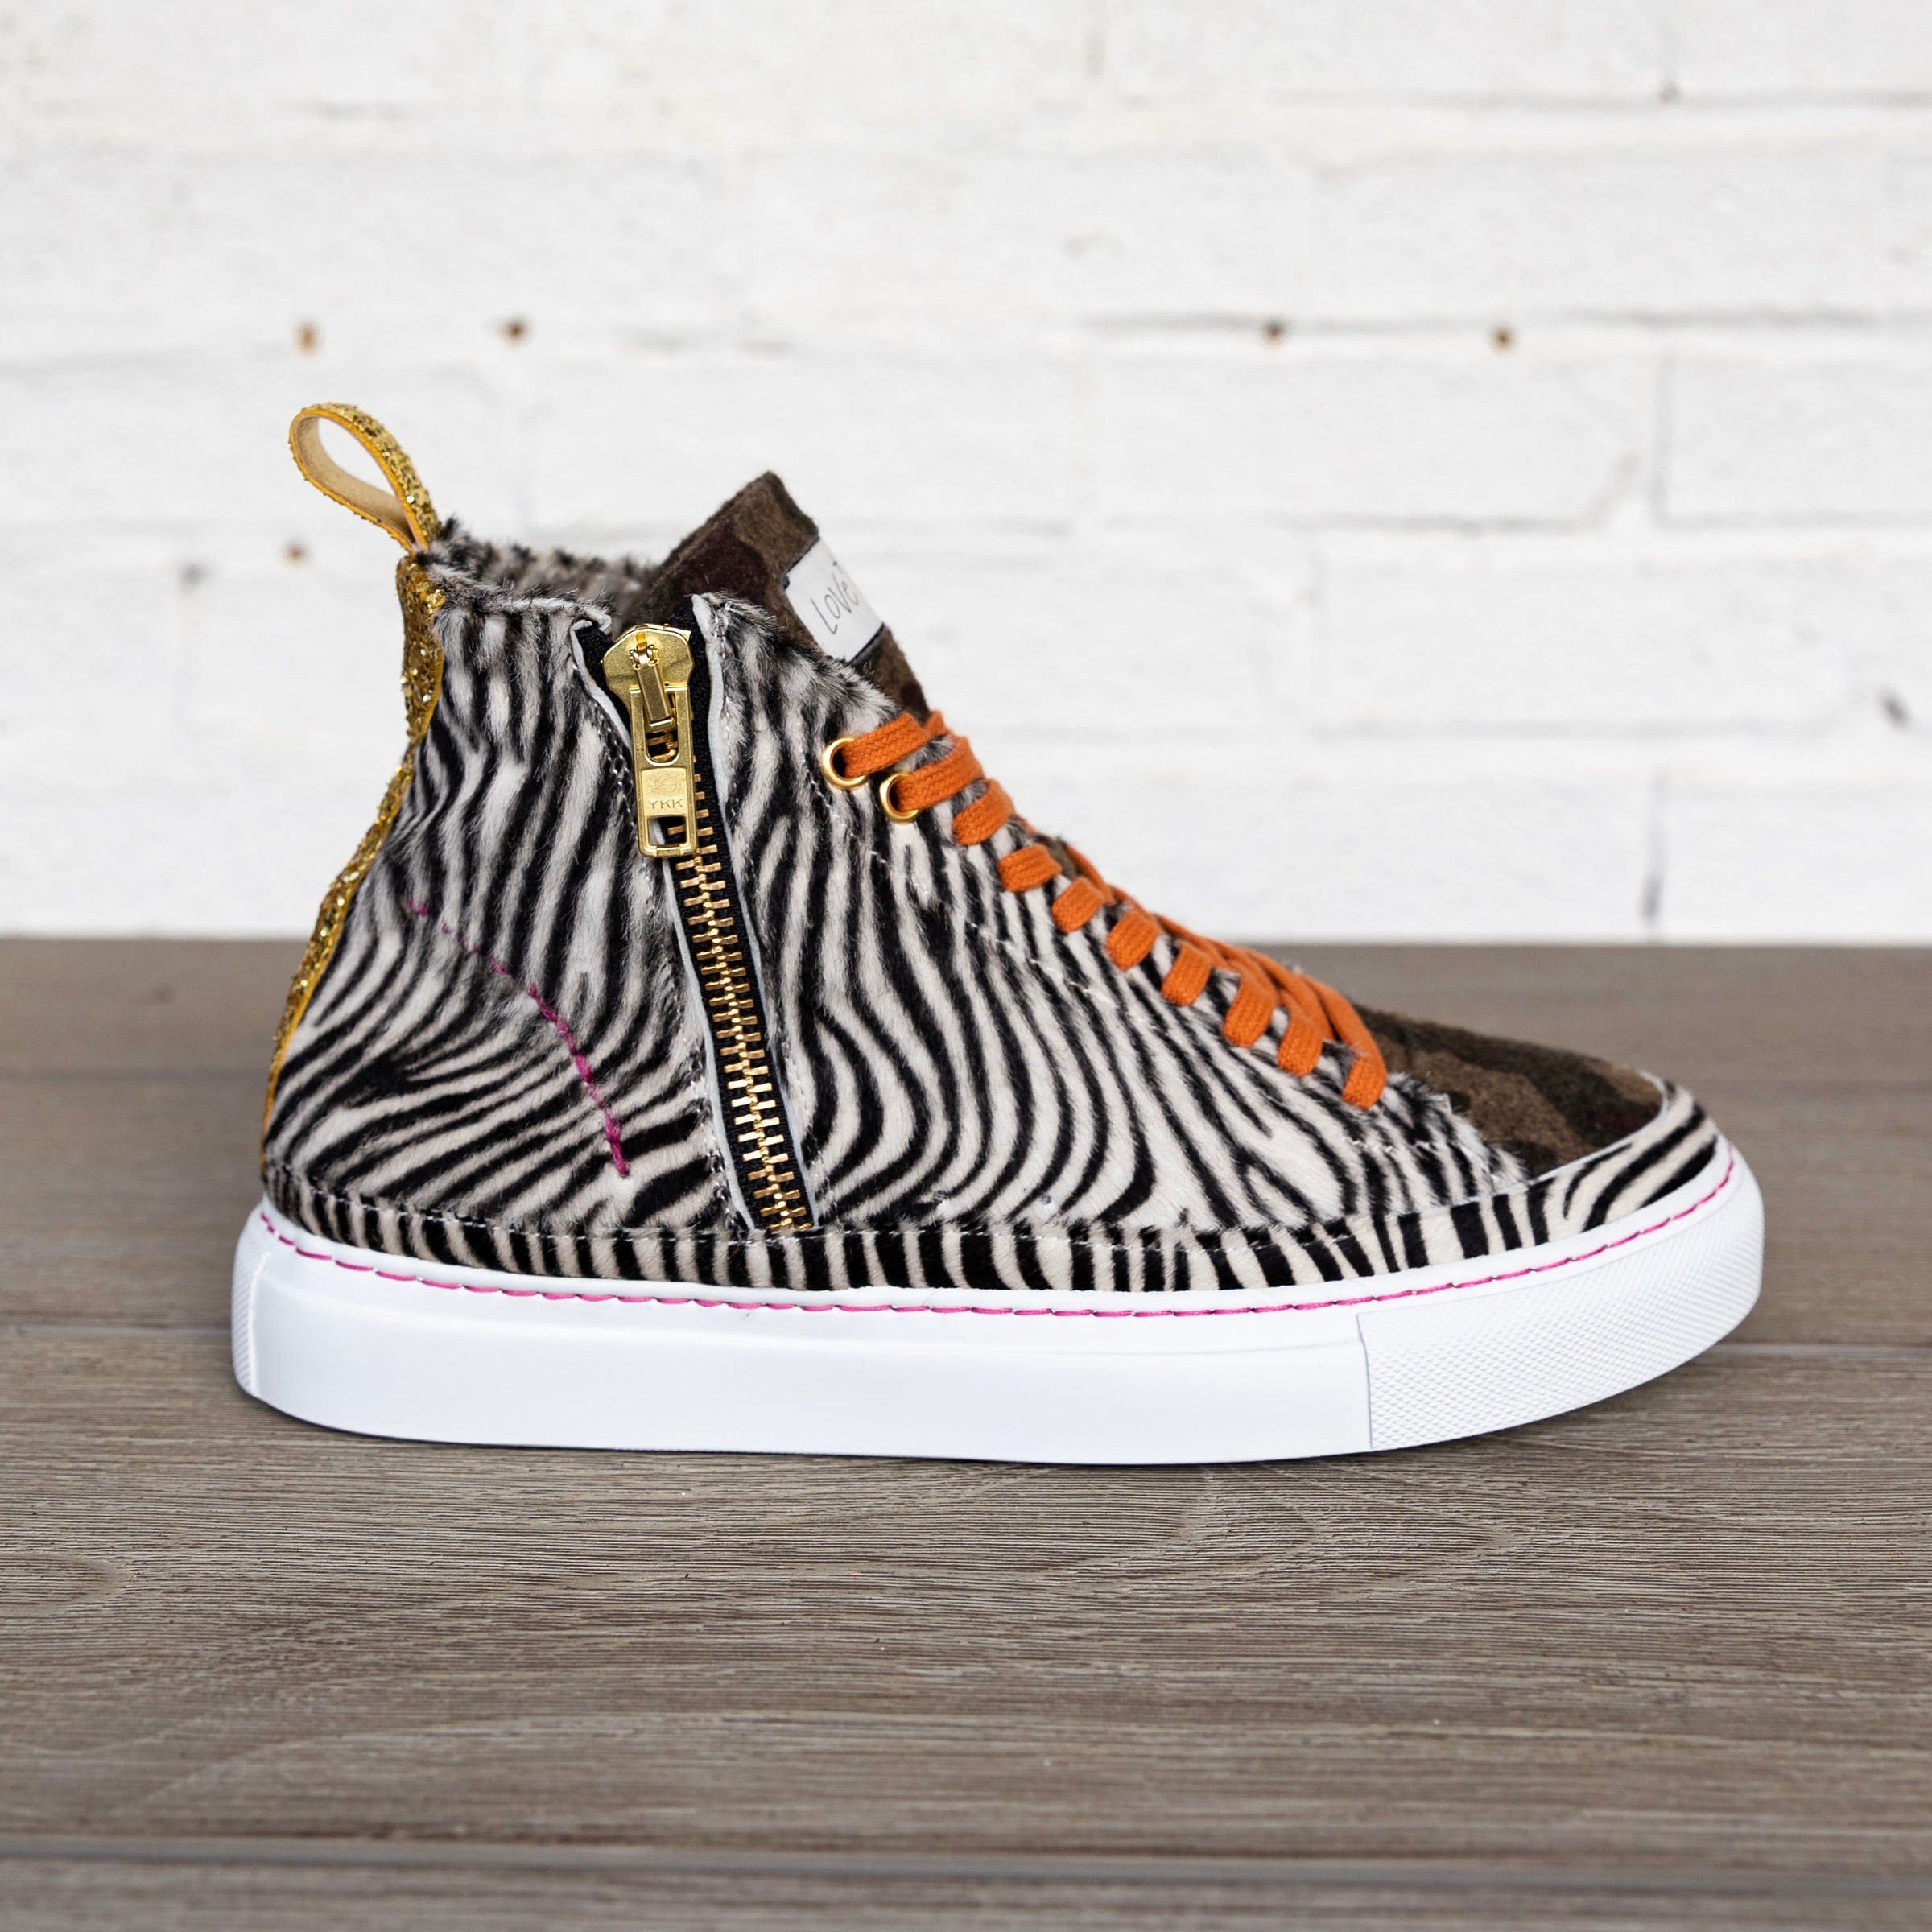 Rainbow Tiger Print Slip-on Shoes (female sizes)